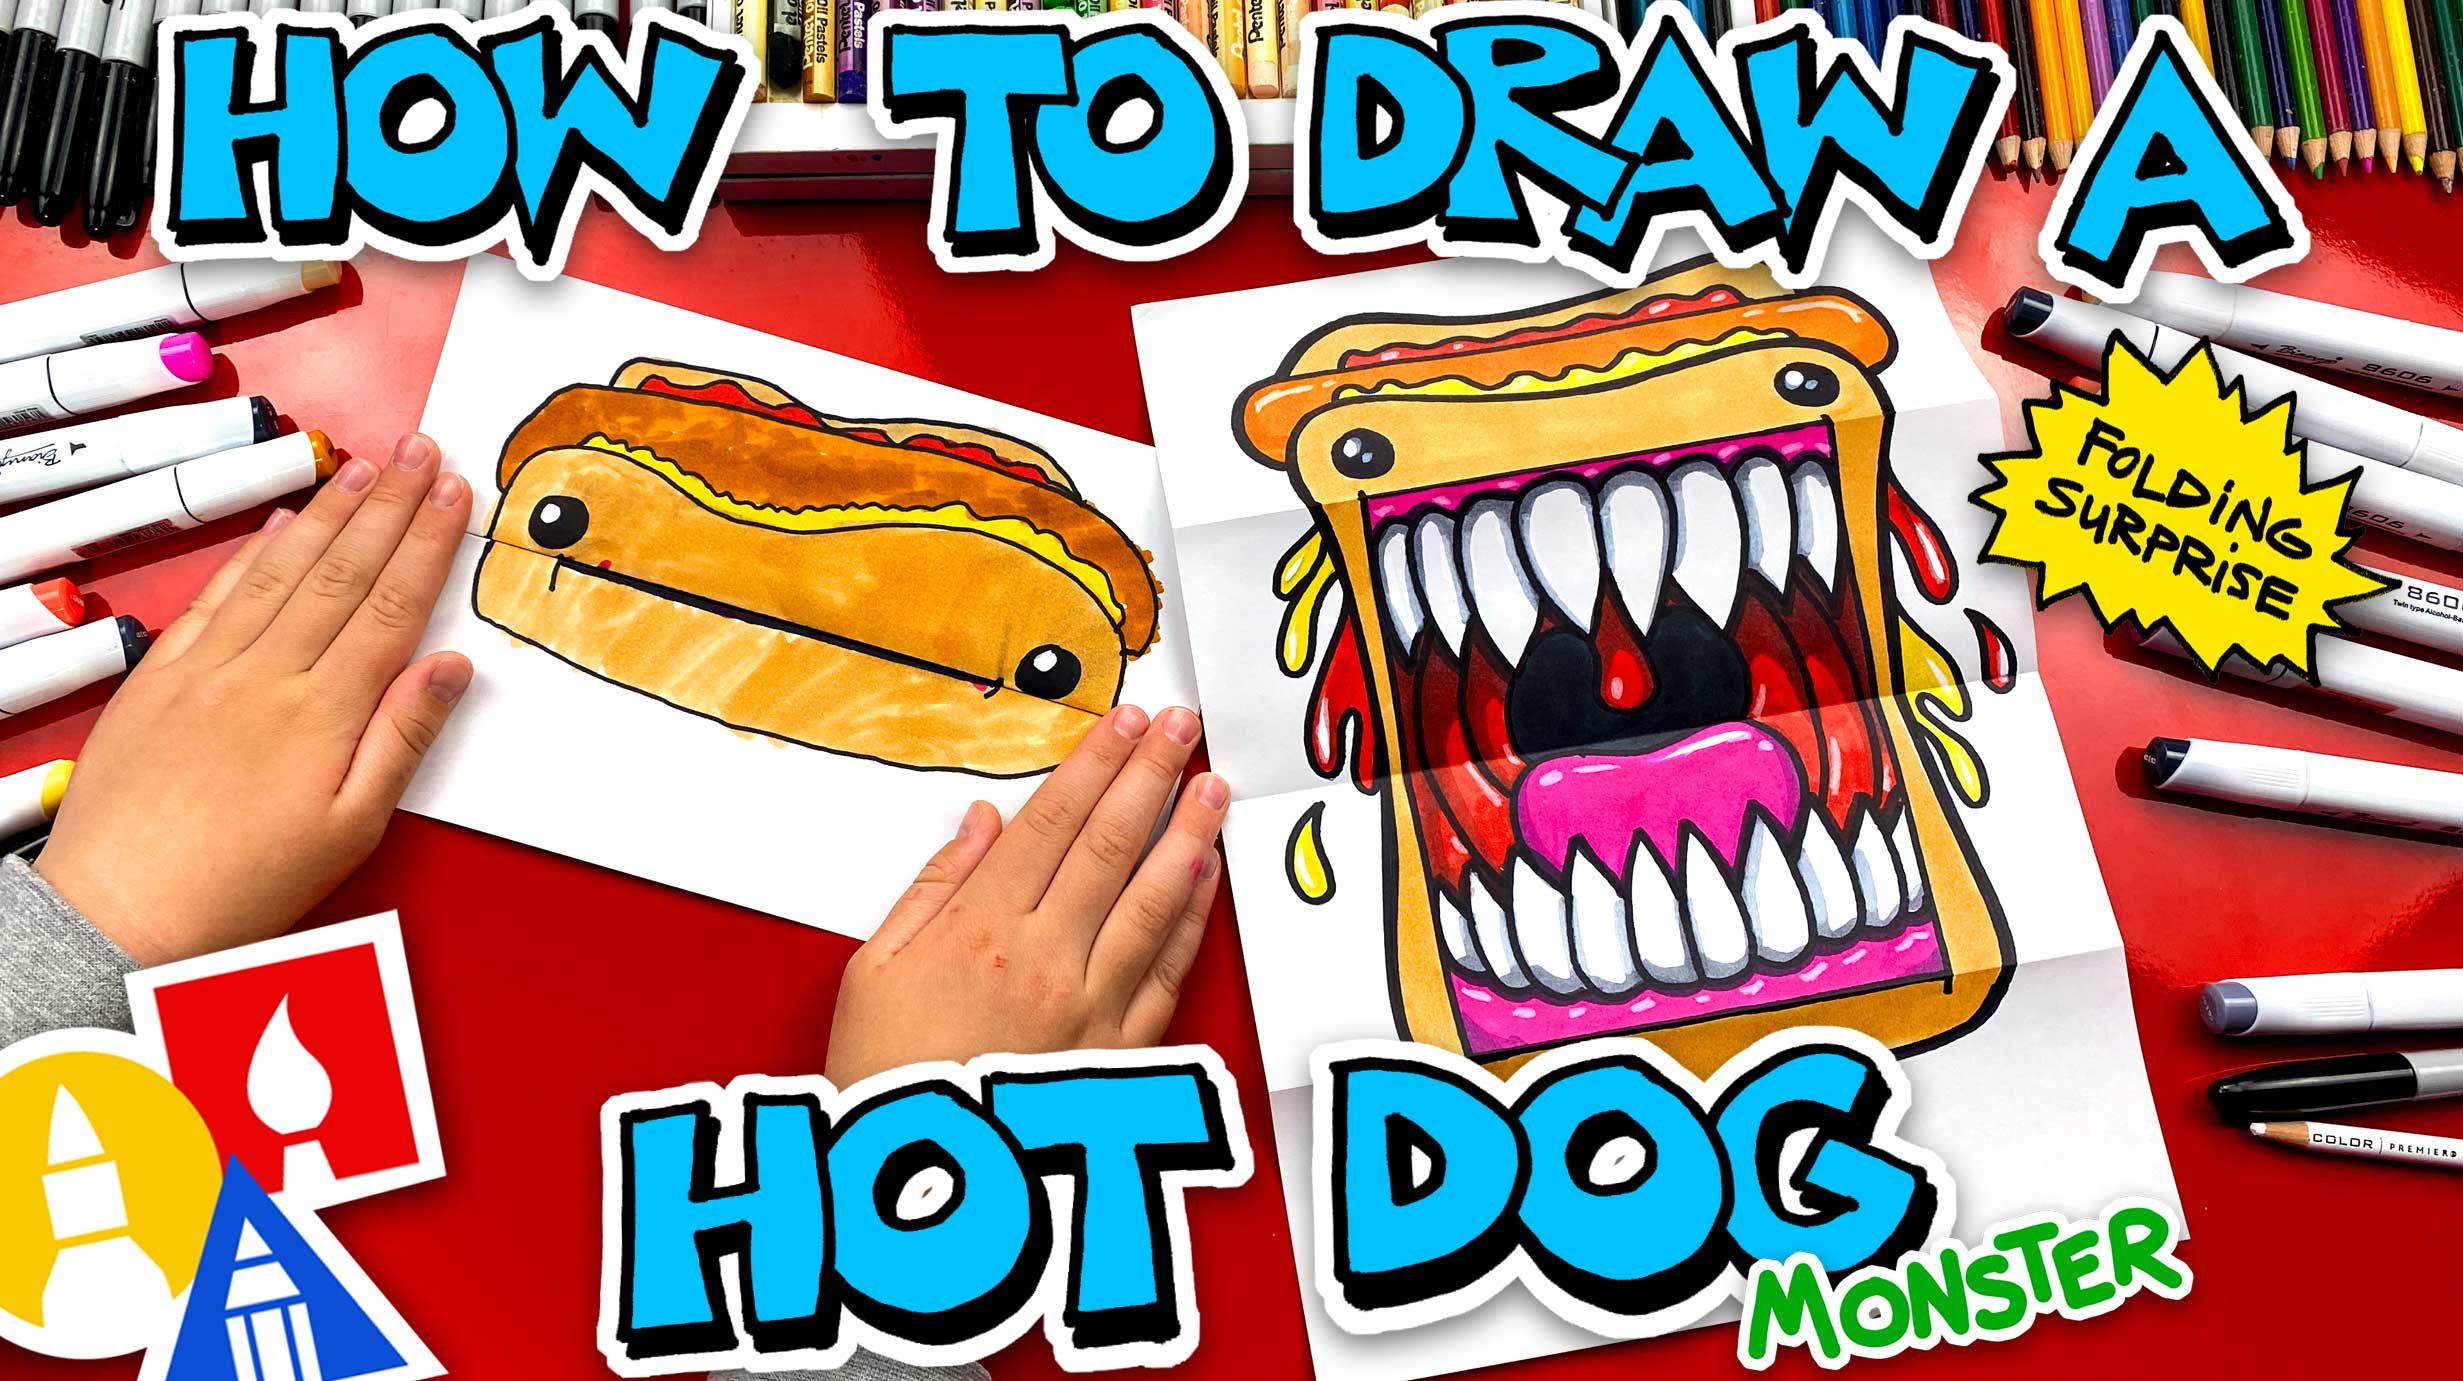 Yummy hotdog bun sticker png | free image by rawpixel.com / Noon | Hot dogs,  Hot dog drawing, American hot dogs